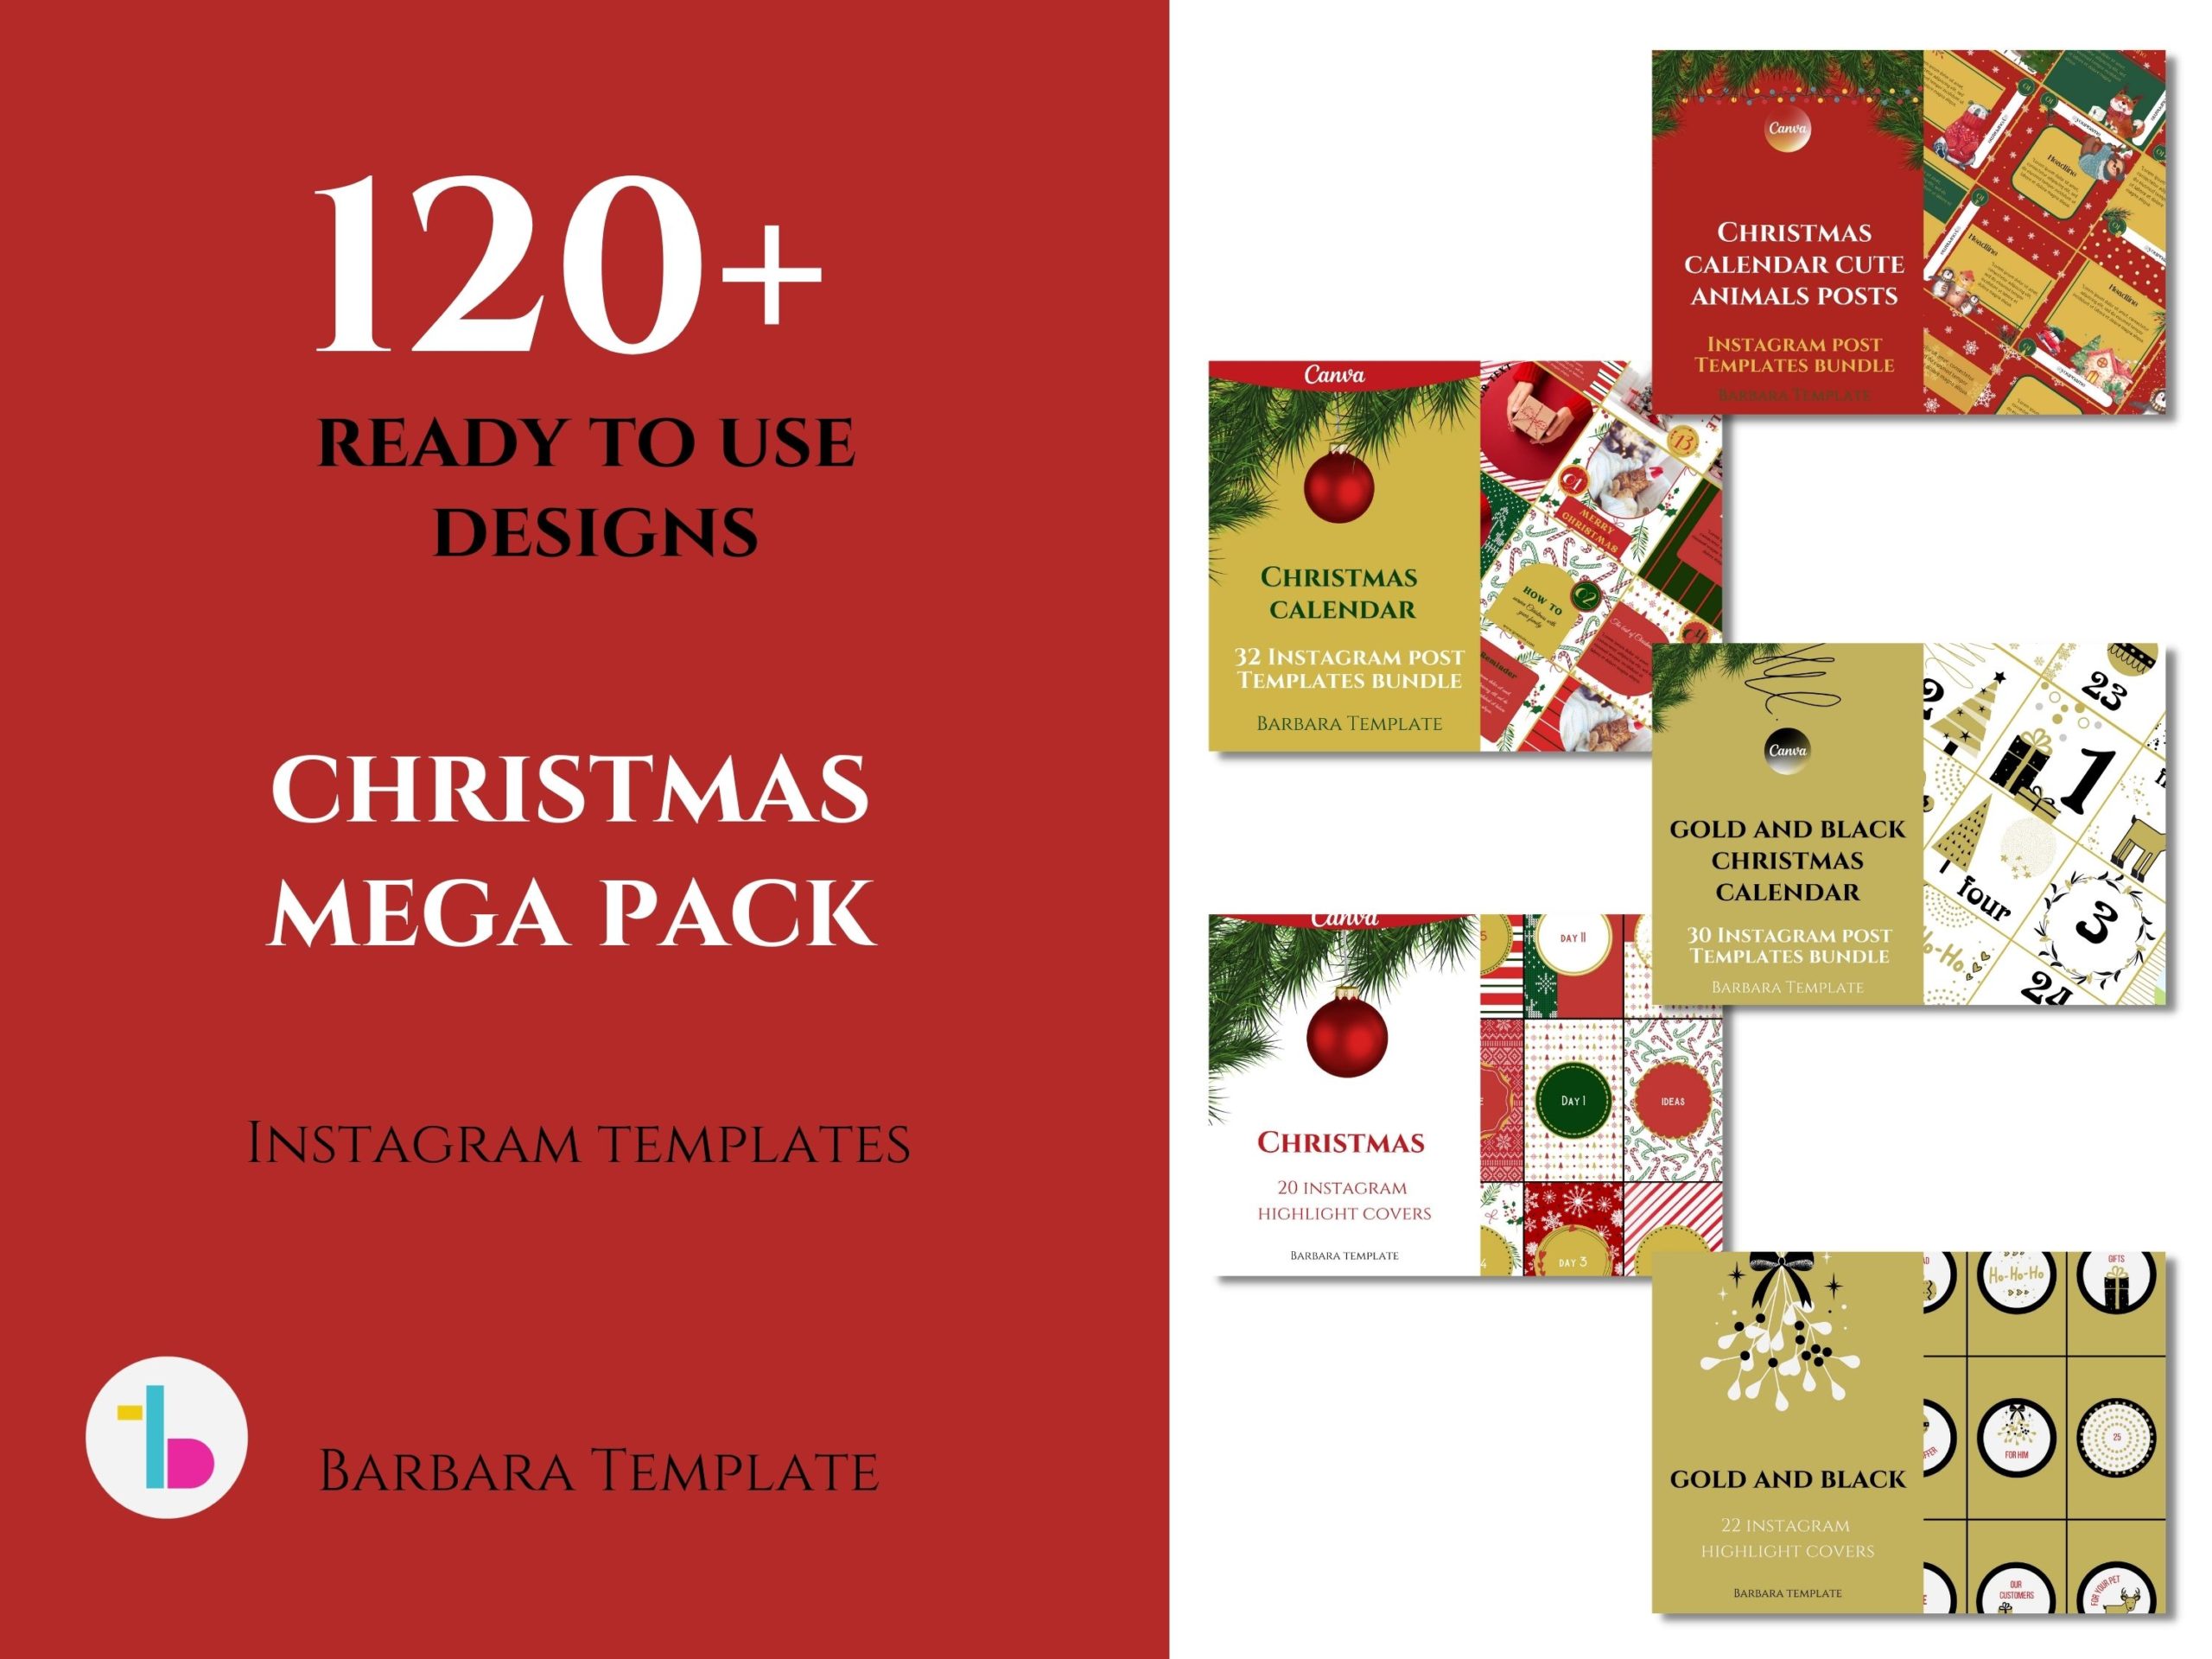 Christmas mega pack templates bundle